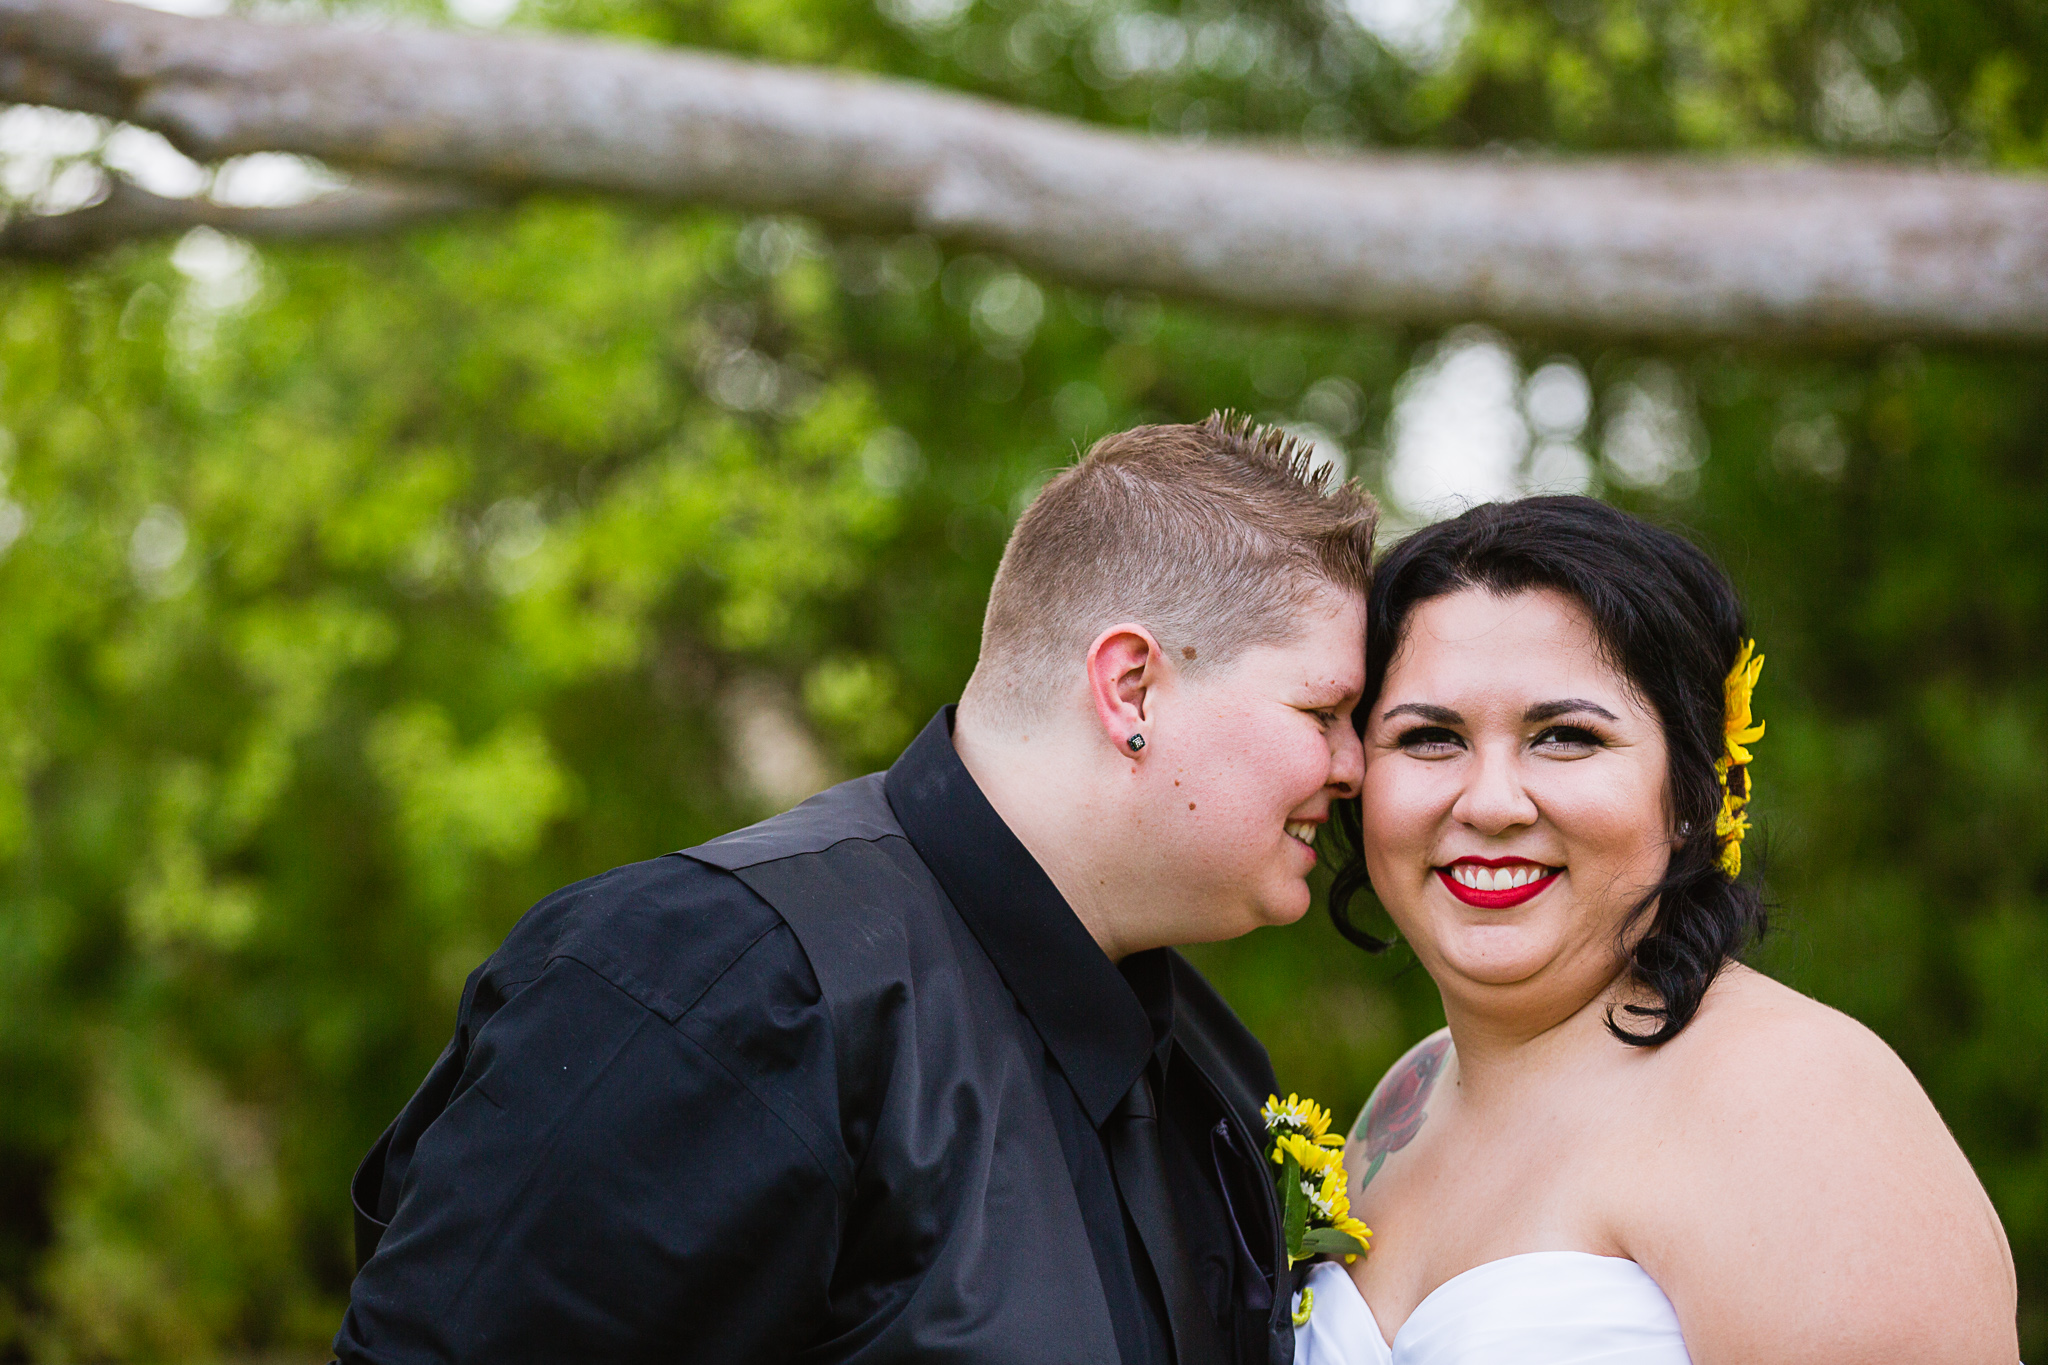 LGBT couple on their wedding day by Phoenix wedding photographers PMA Photography.